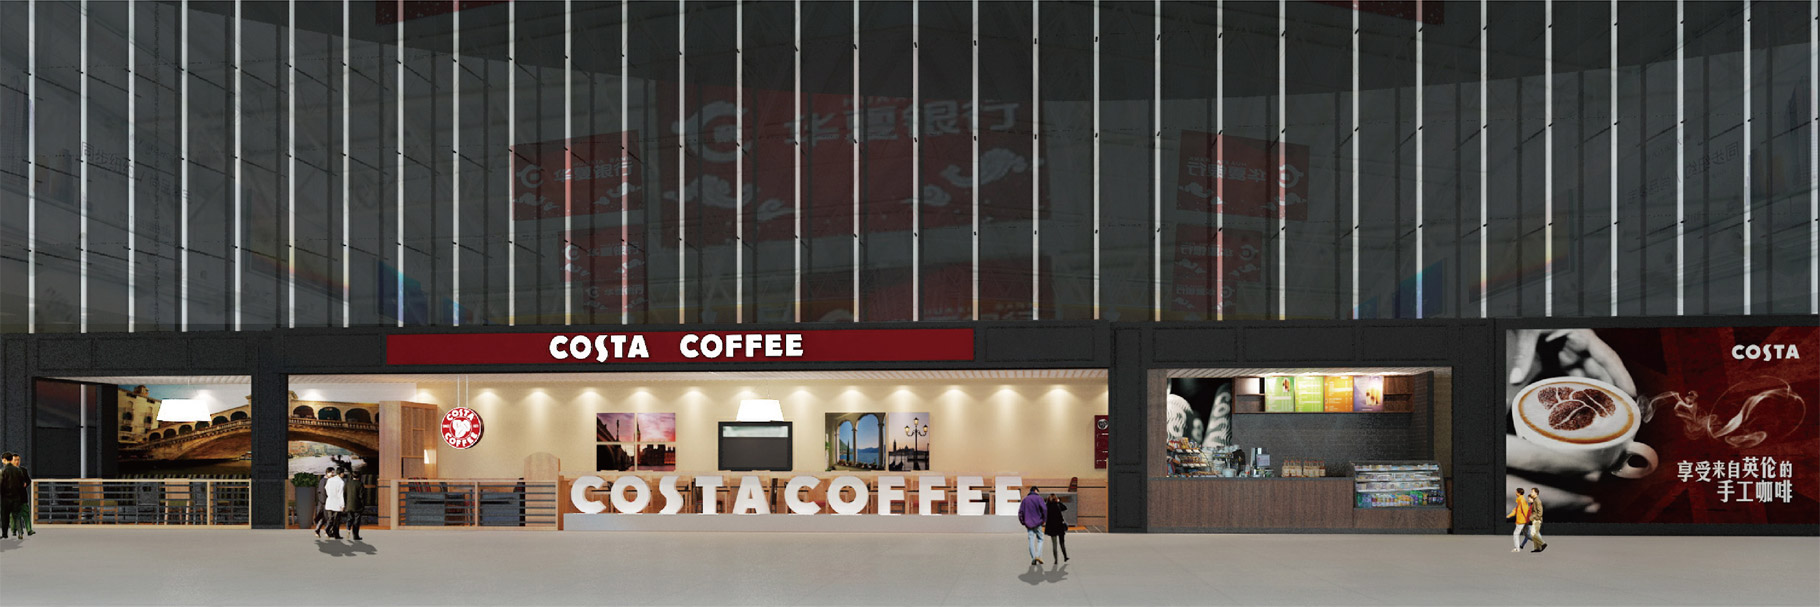 COSTA咖啡|慧臻品牌整合传播